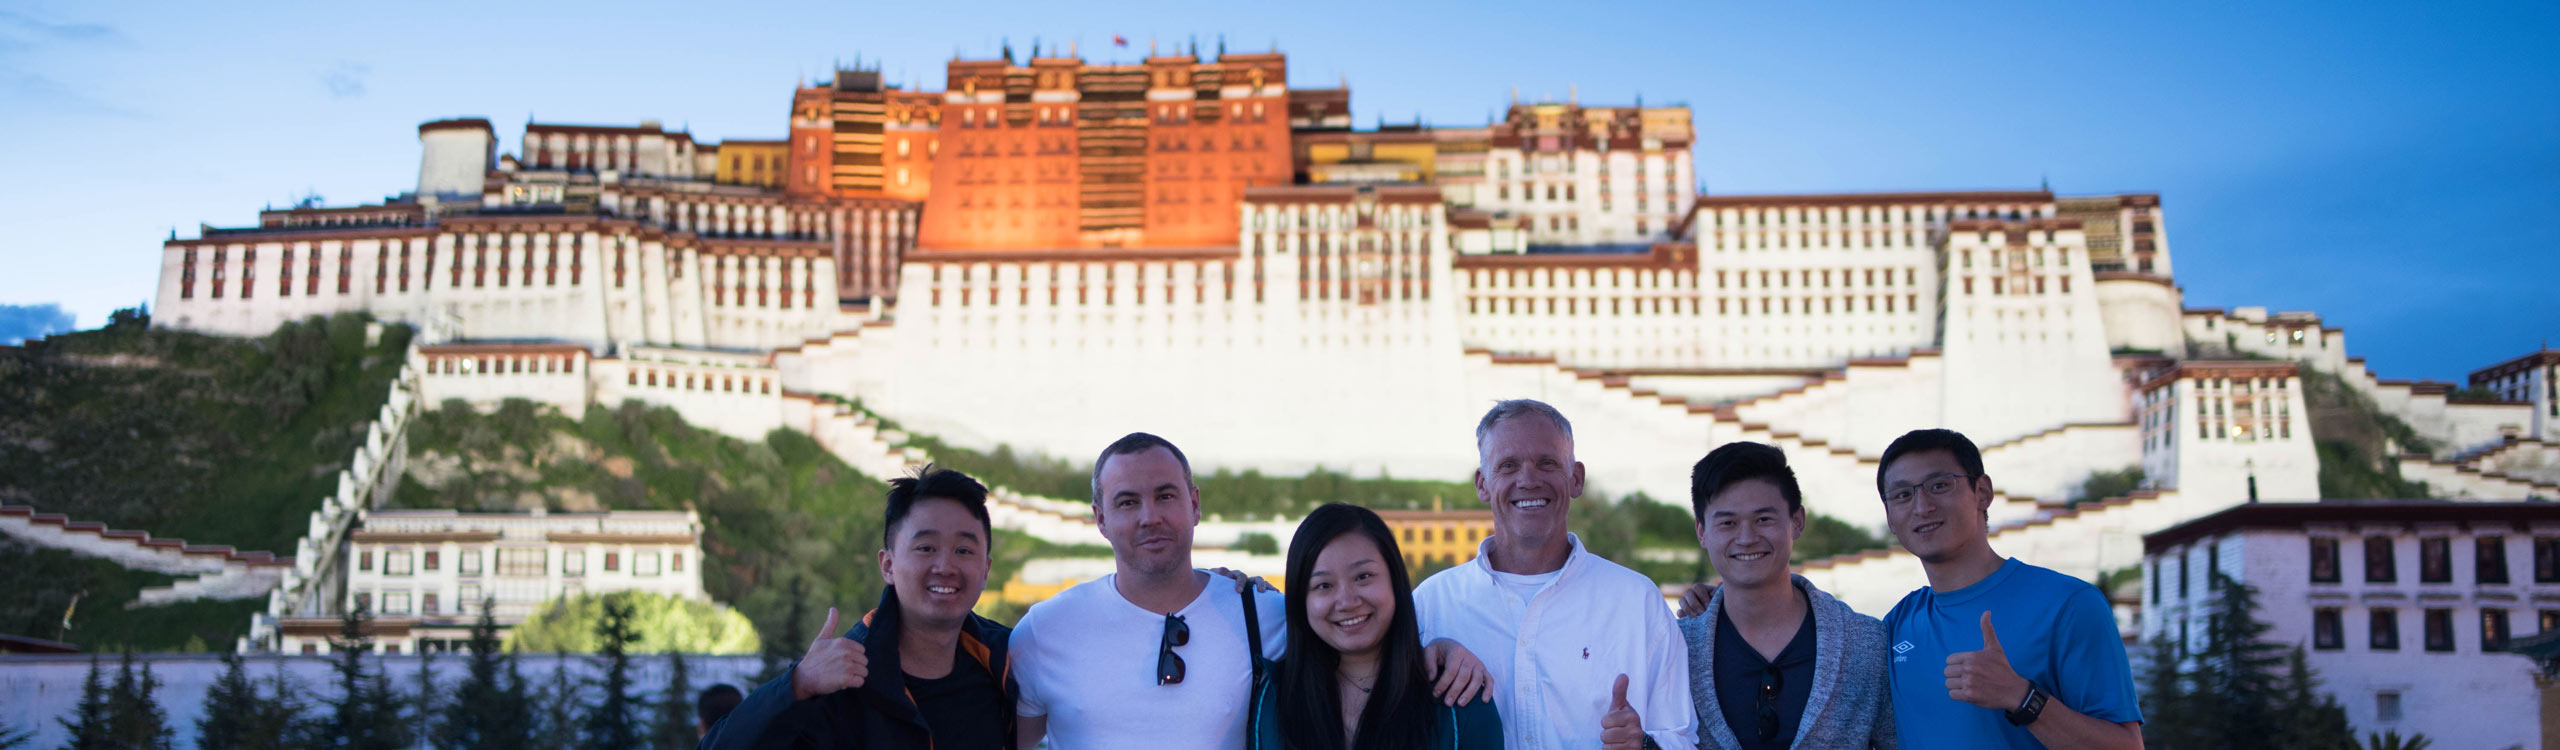 Visiting the majestic Potala Palace, Lhasa